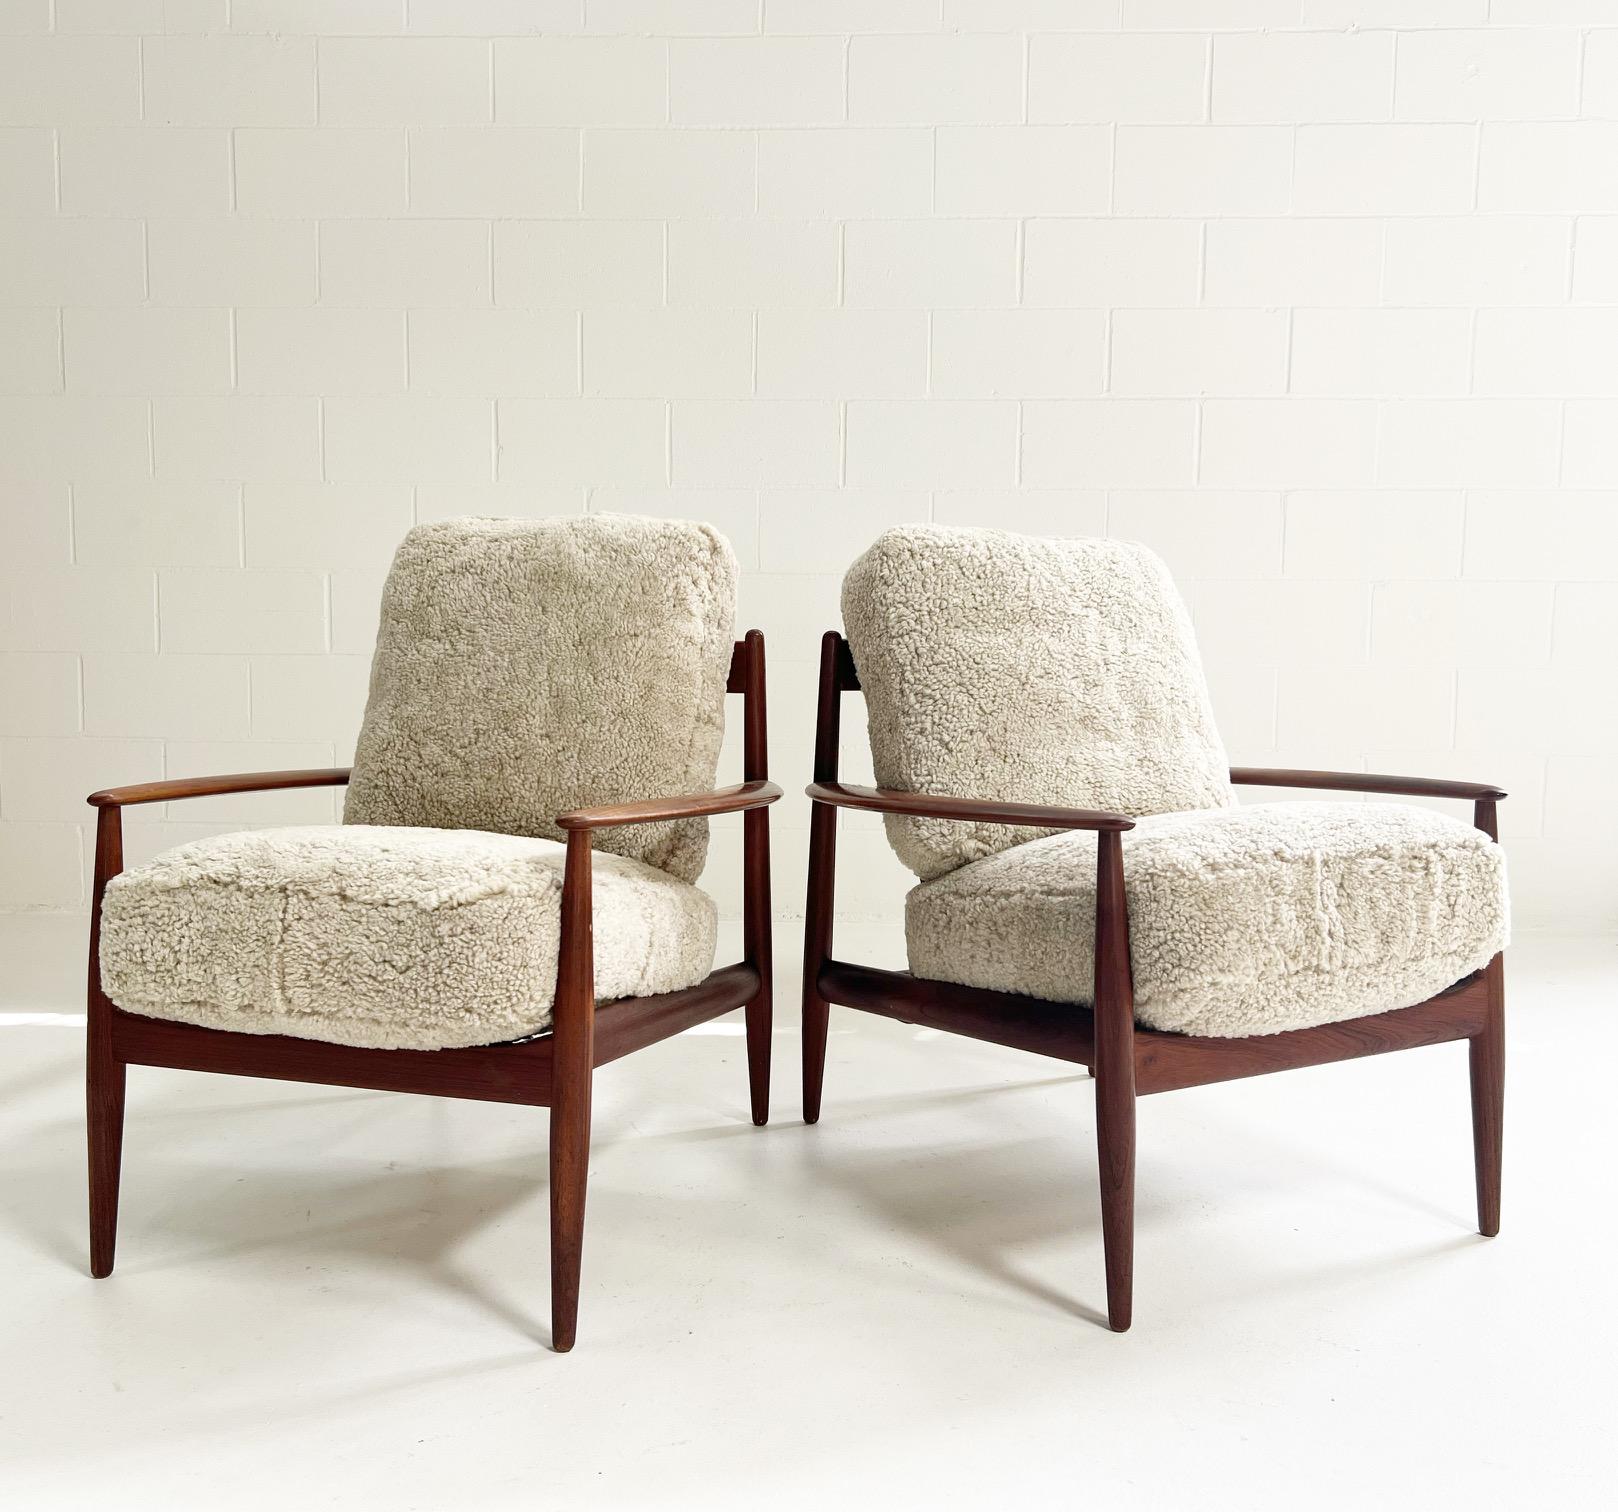 Sheepskin Grete Jalk Model 118 Lounge Chairs in Shearling, Pair